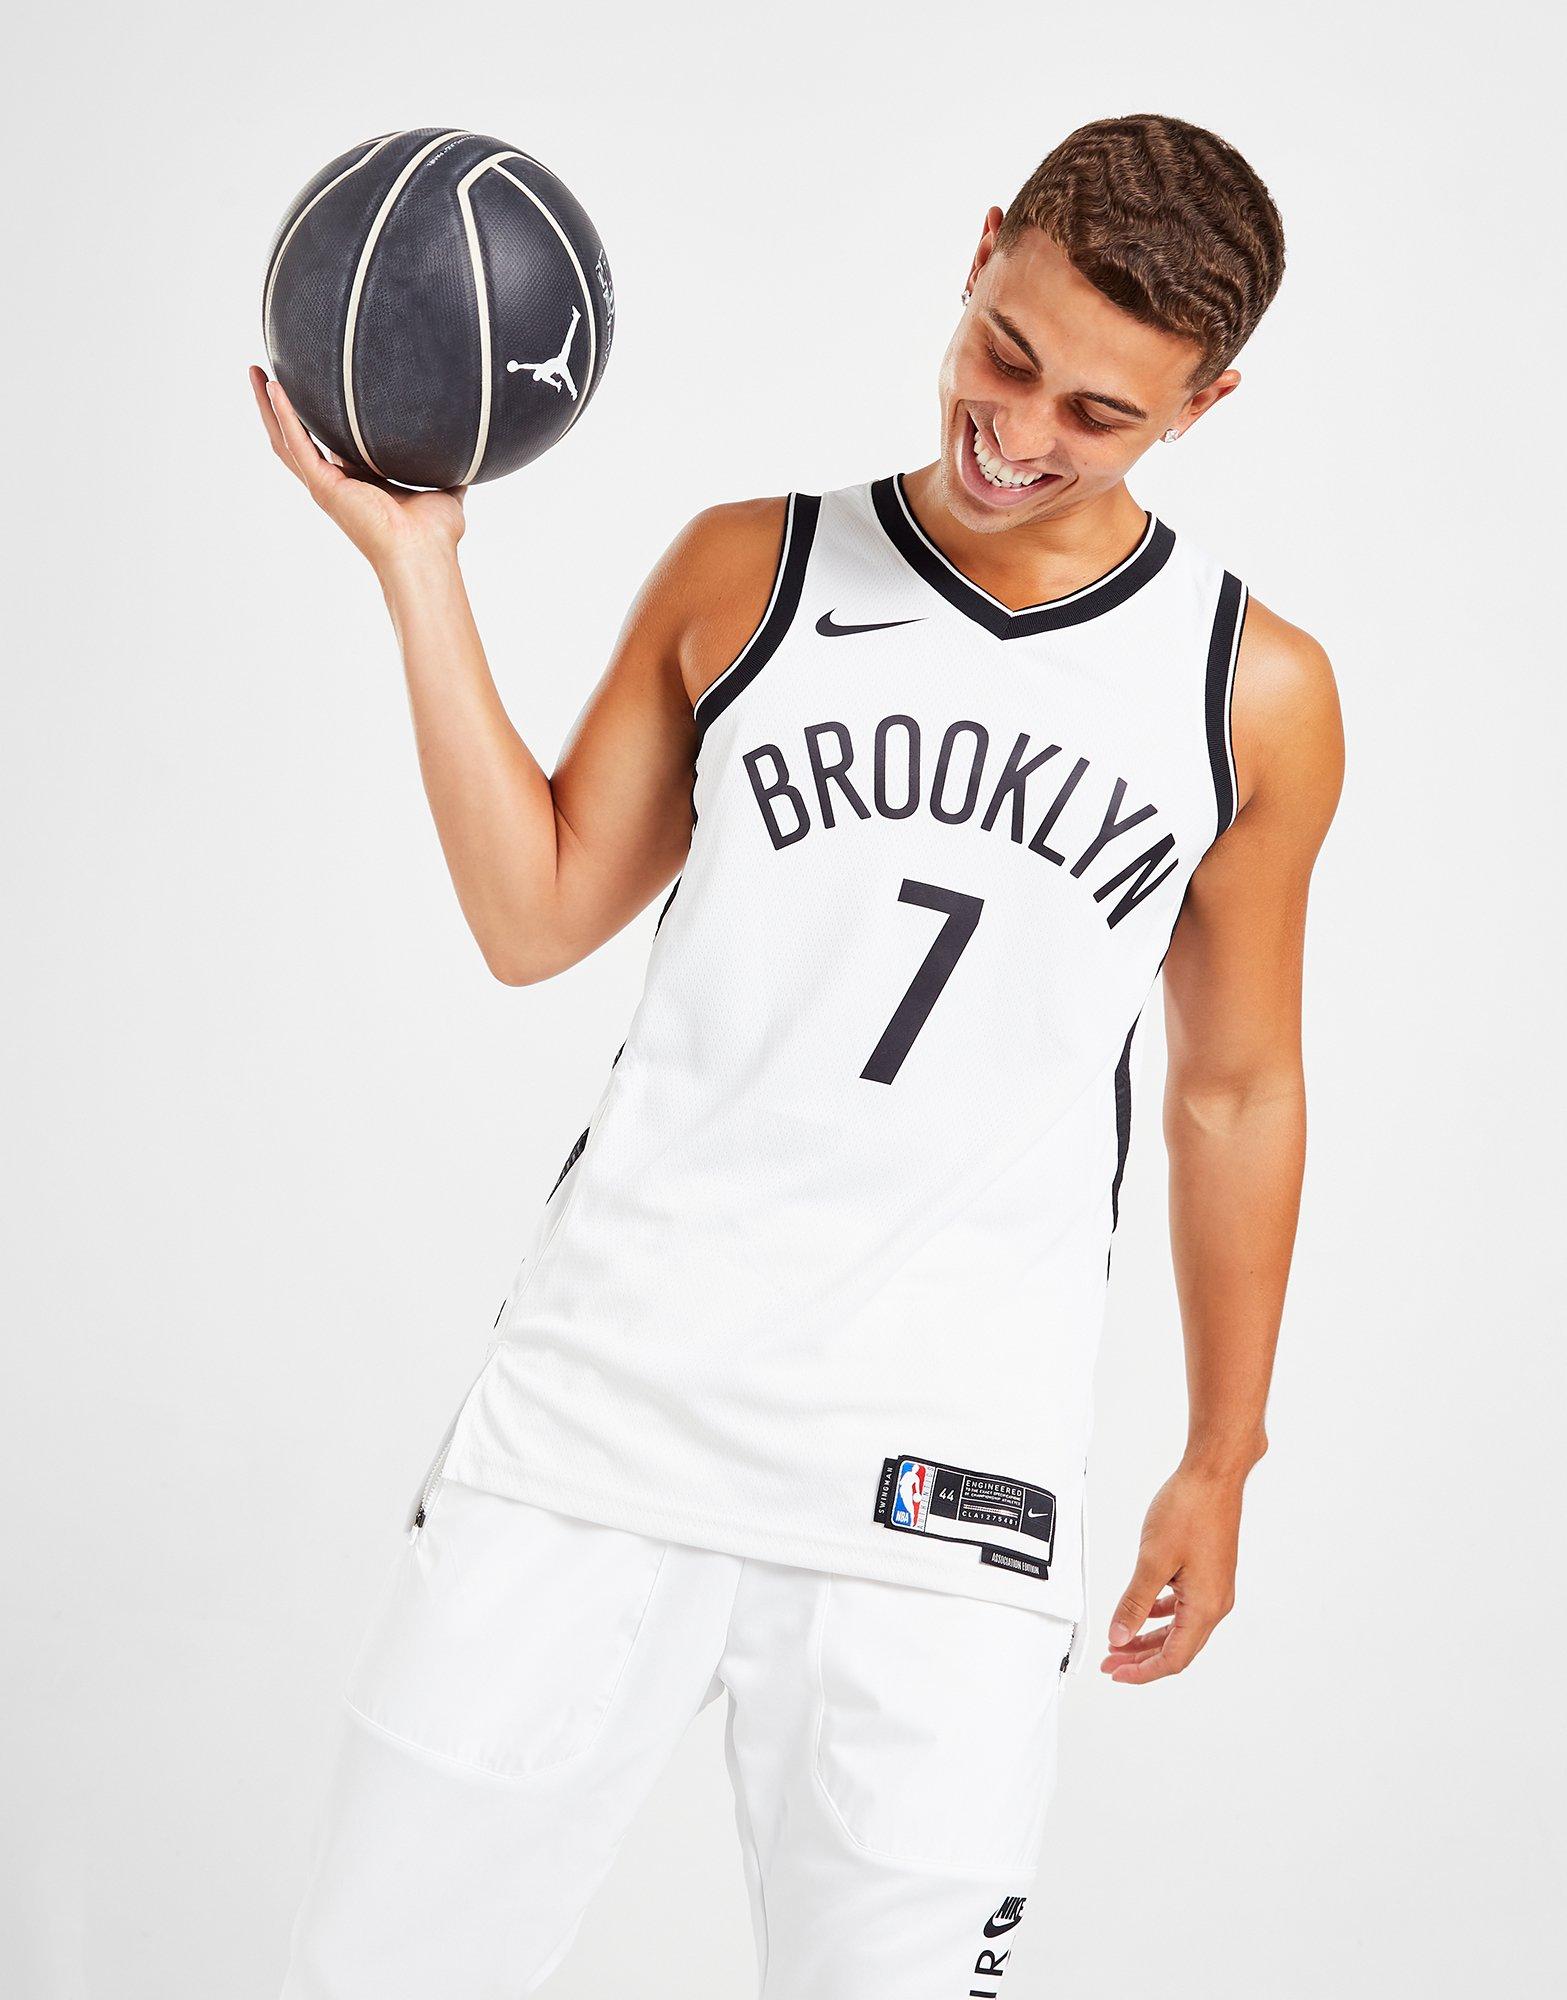 Brooklyn Nets Patch Denim Jacket, M